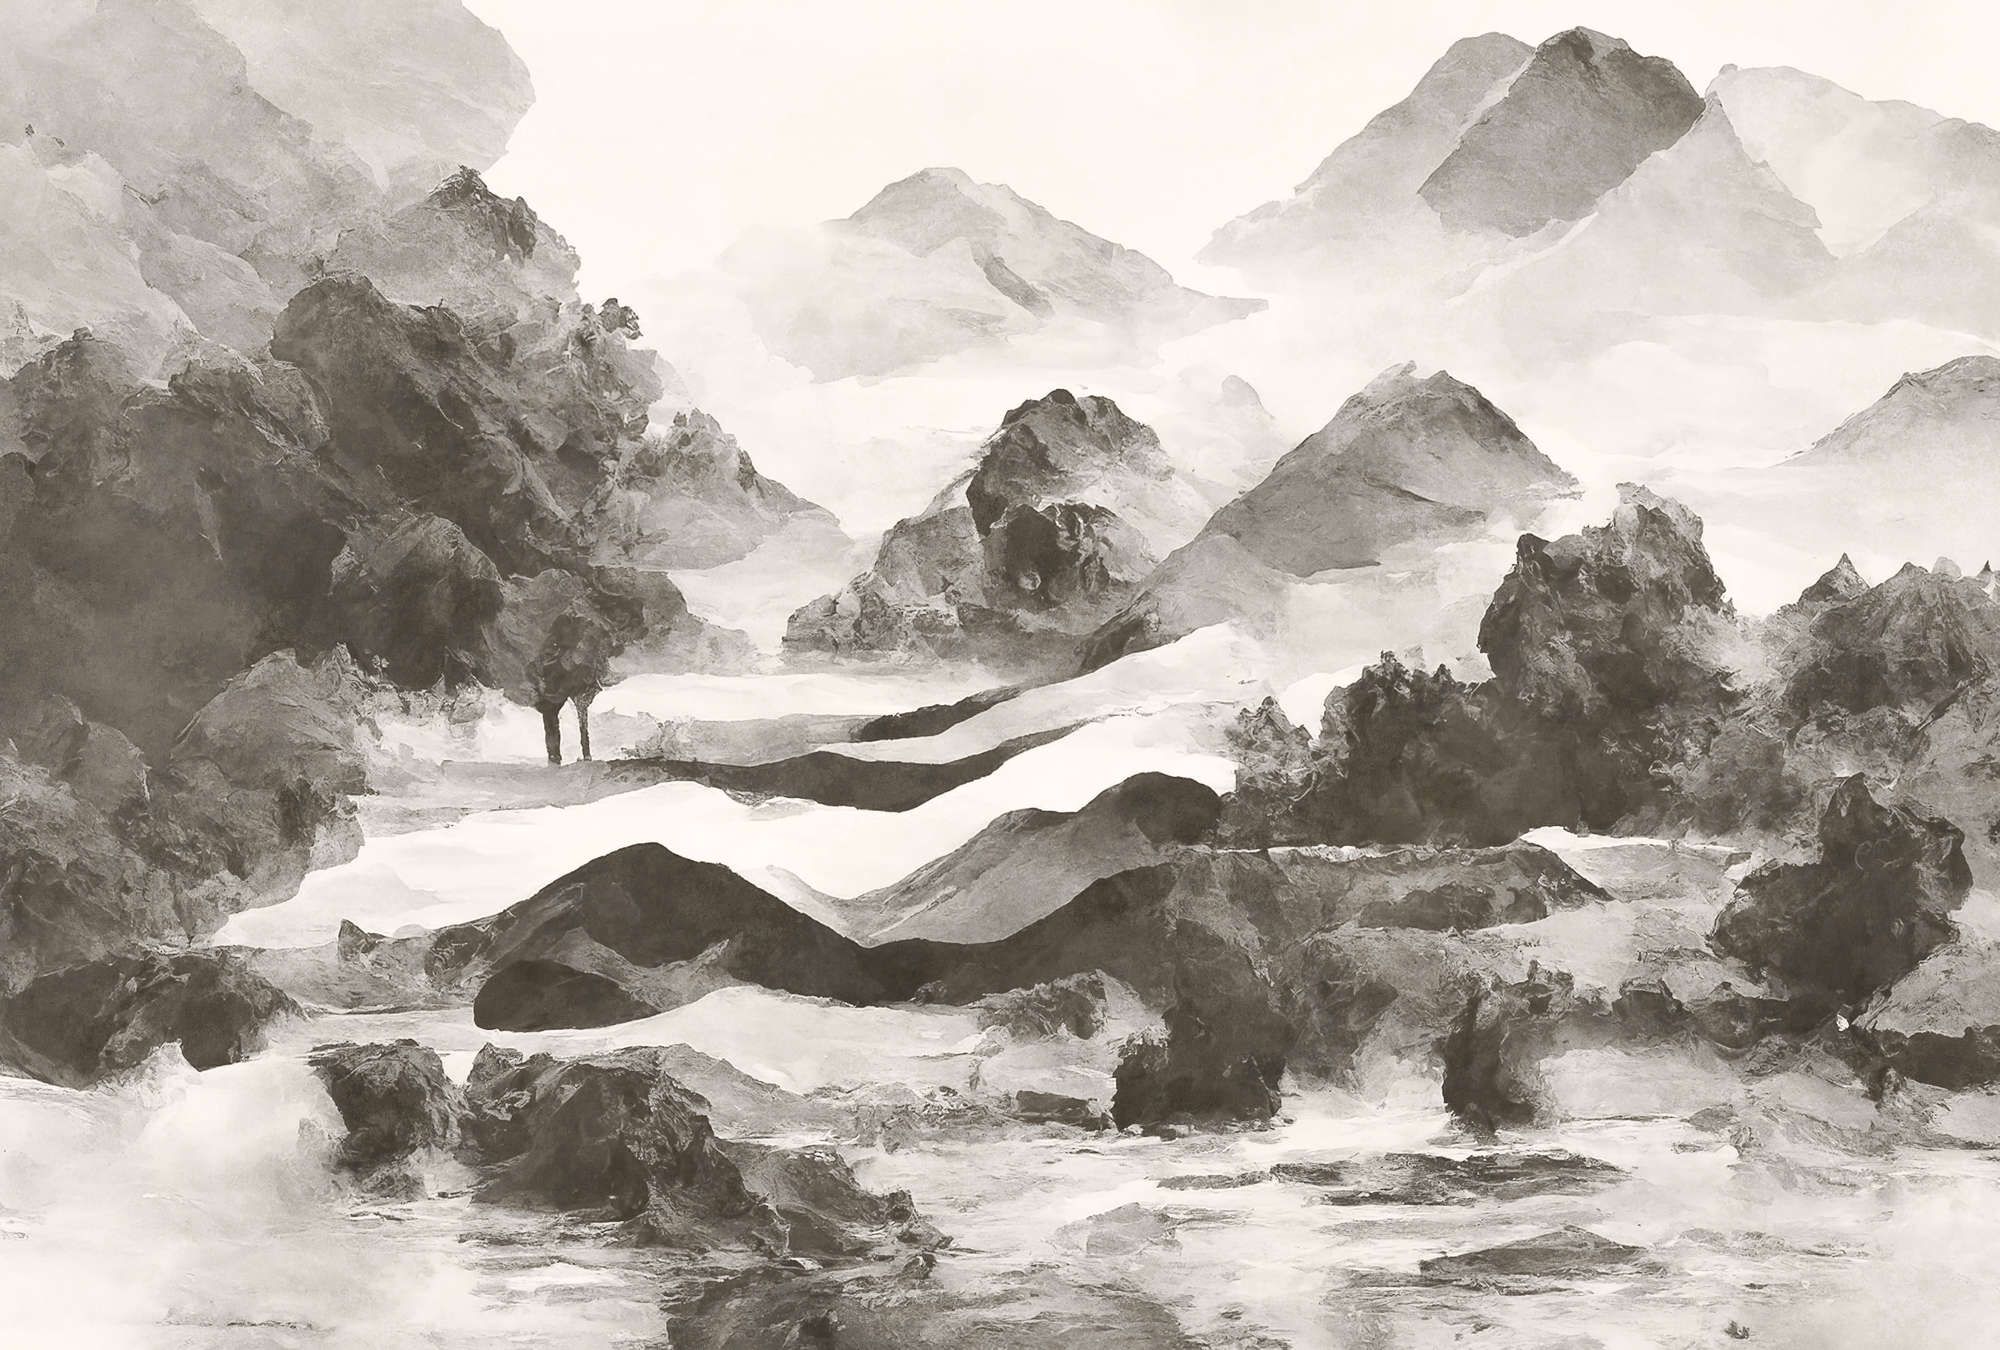             Fotomural »tinterra 1« - Paisaje con montañas y niebla - Gris | Mate, Tela no tejida lisa
        